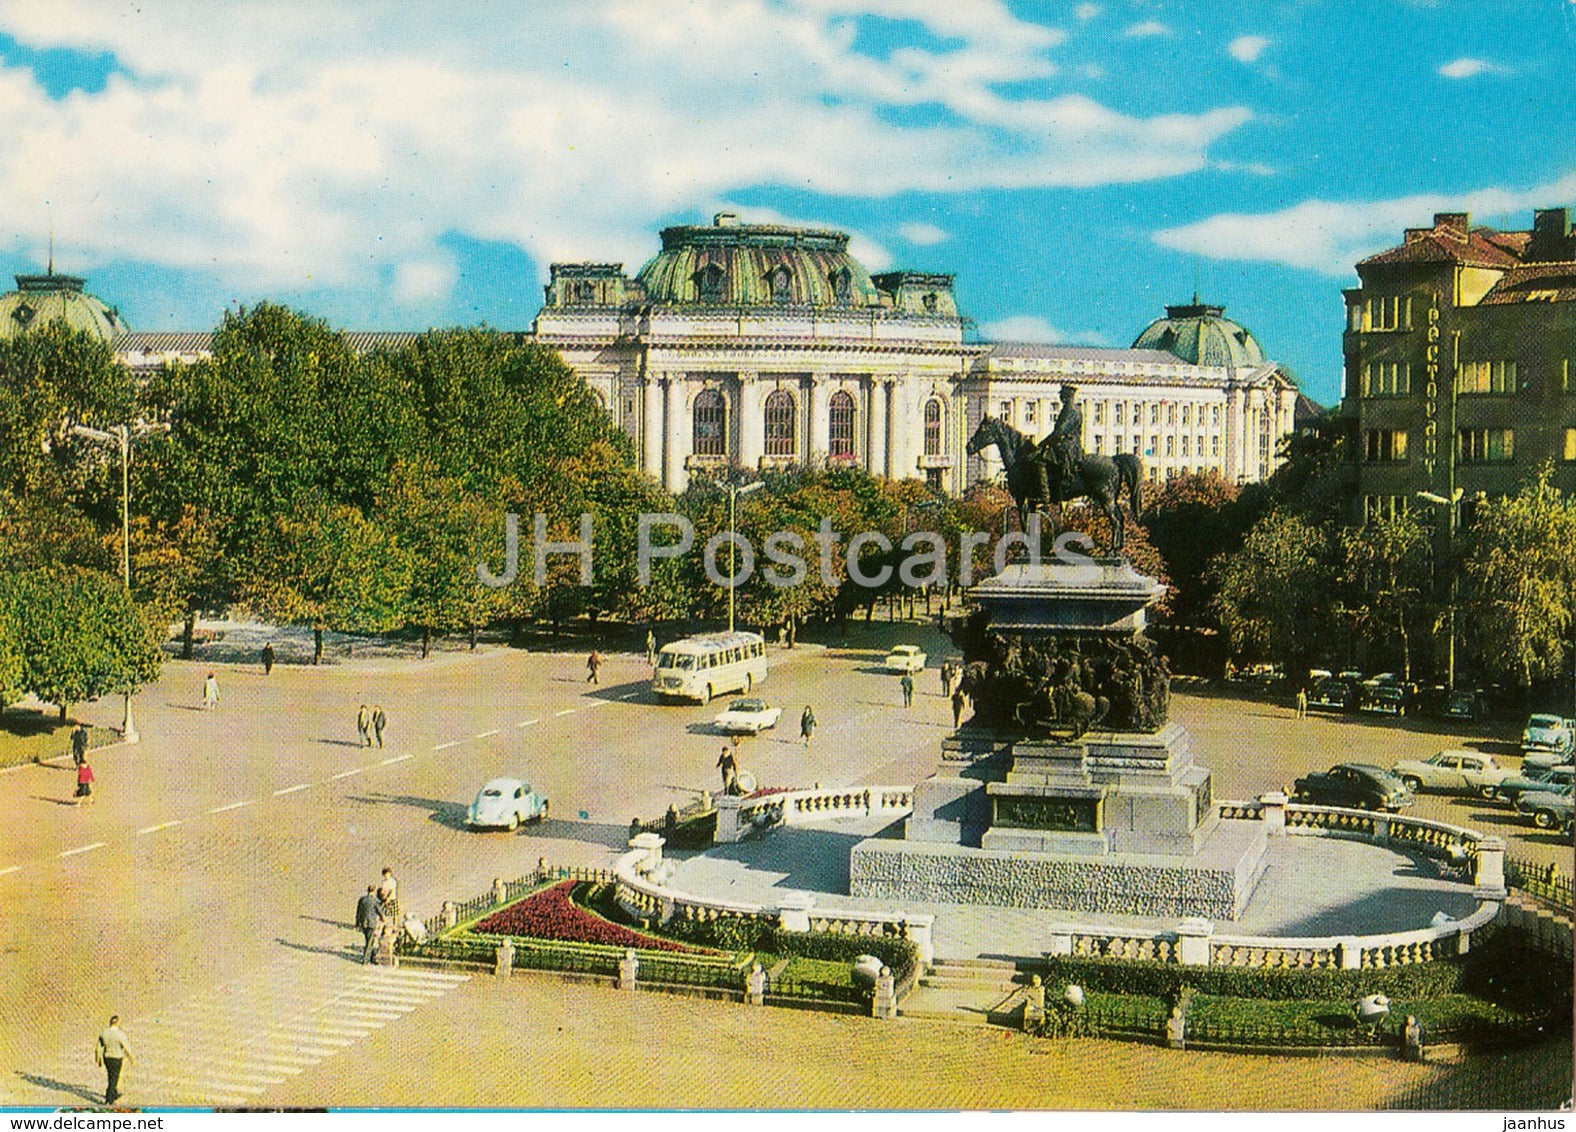 Sofia - Public Square - Narodno Sobranie - bus - 1973 - Bulgaria- unused - JH Postcards